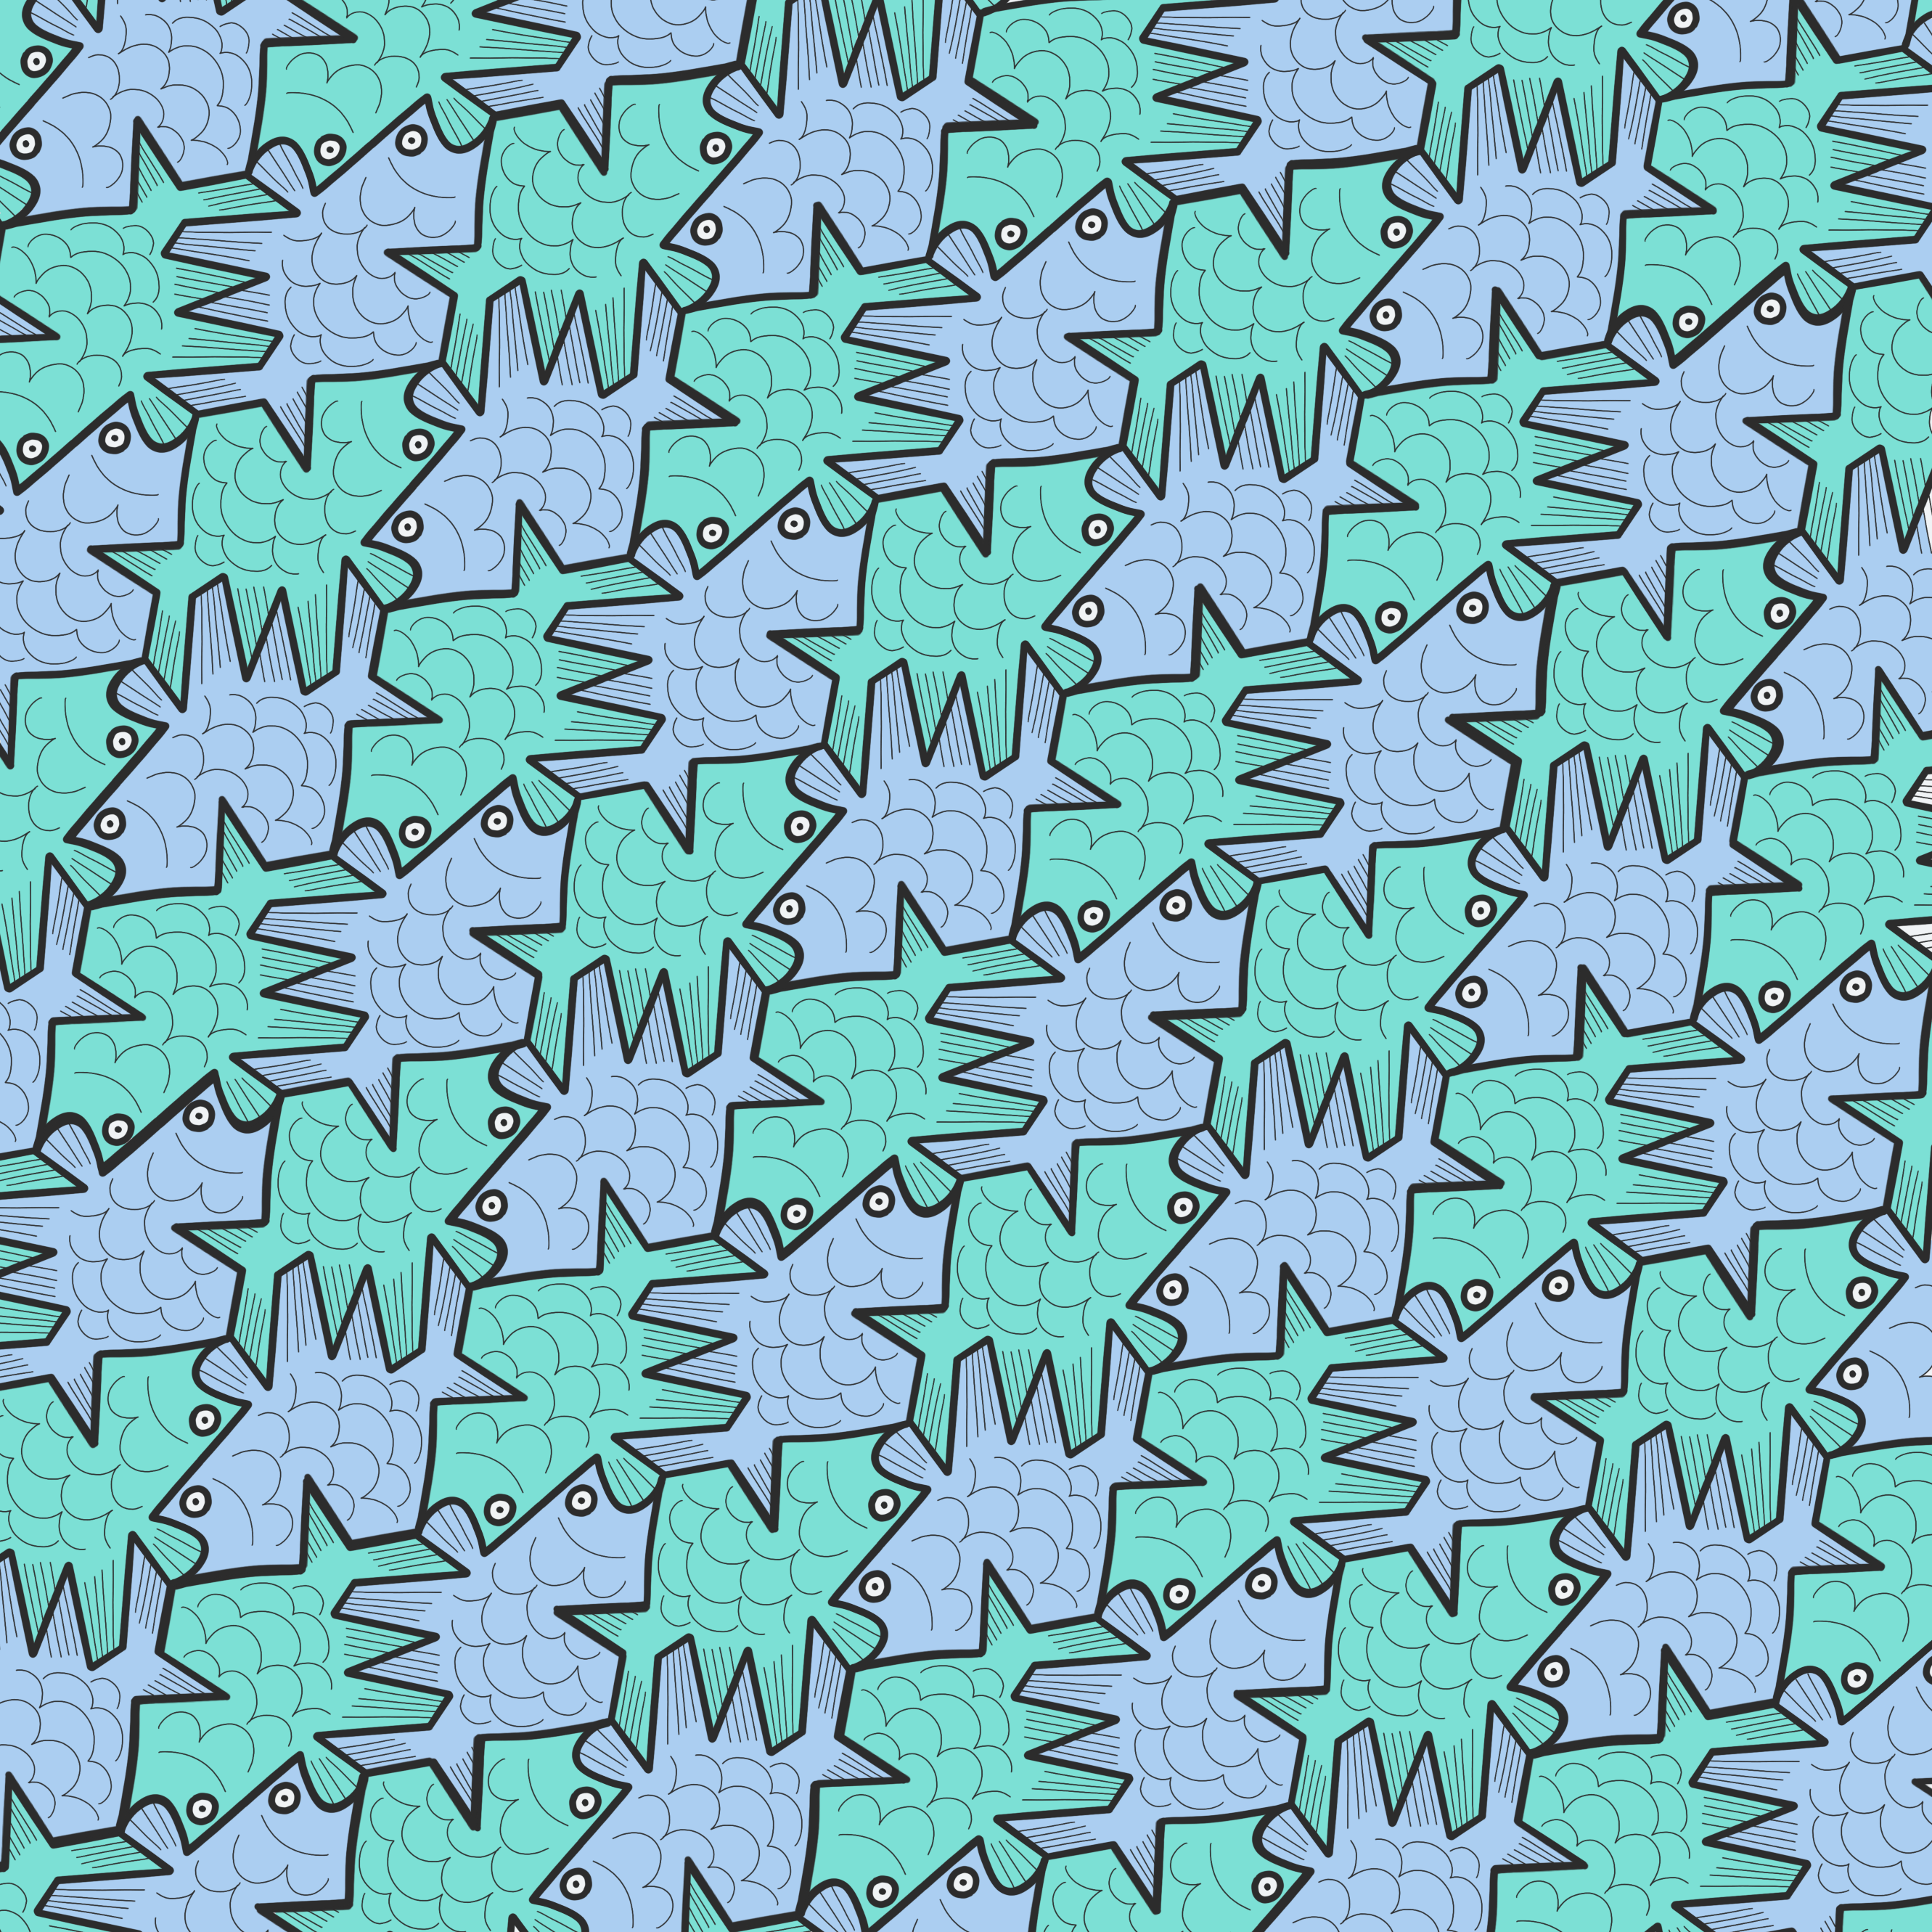 iPhone8 plus parallax #wallpaper #fish #tessellation #Escher like